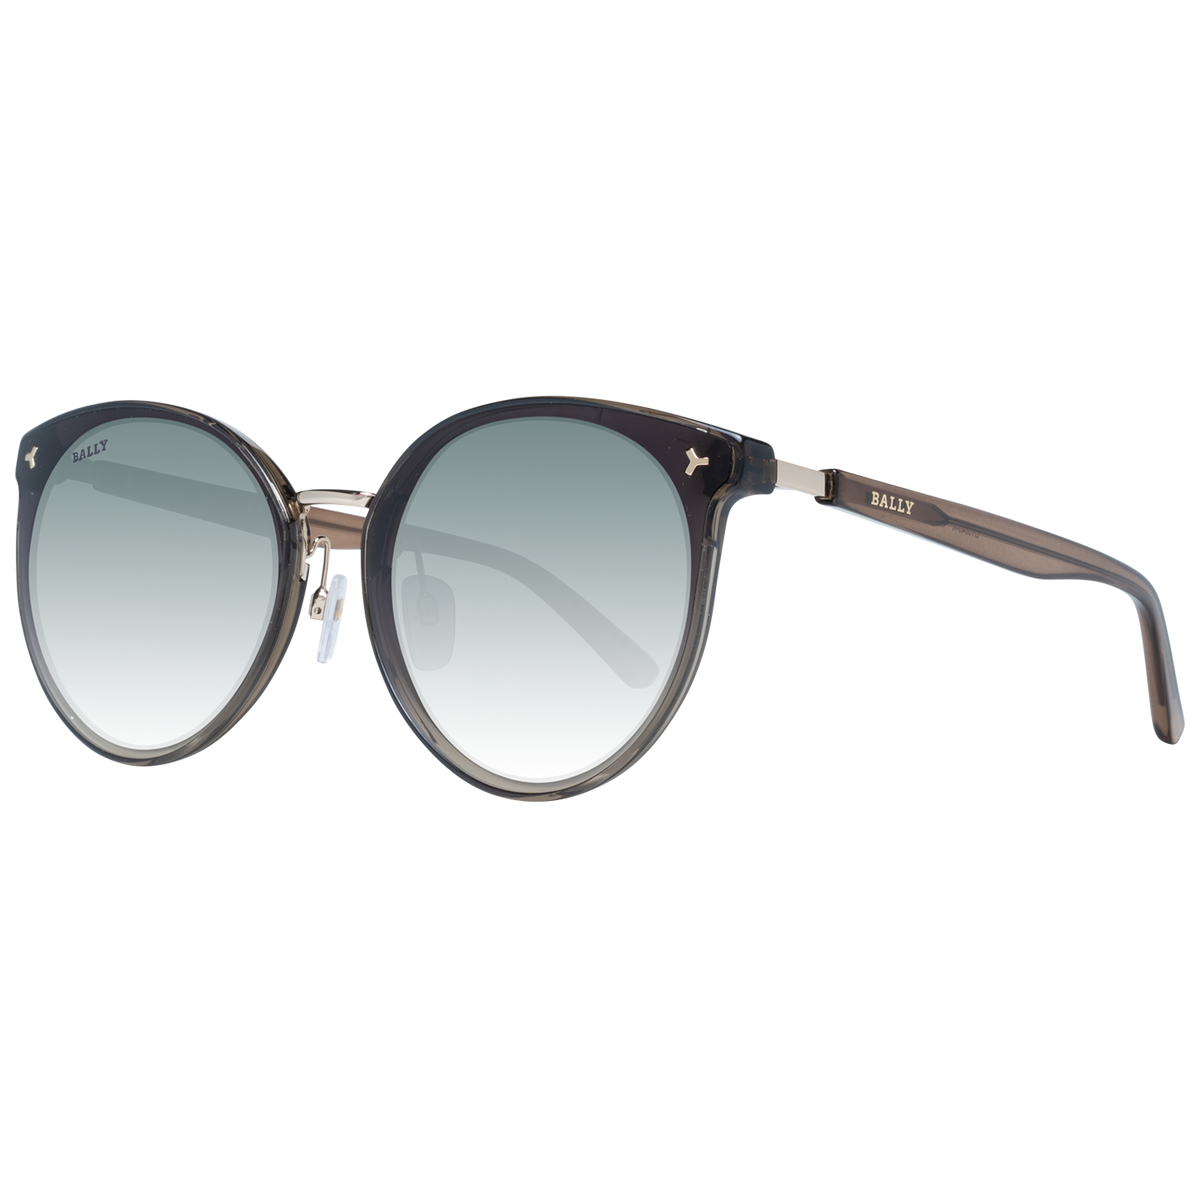 Shop Bally Men's Designer Sunglasses up to 65% Off | DealDoodle